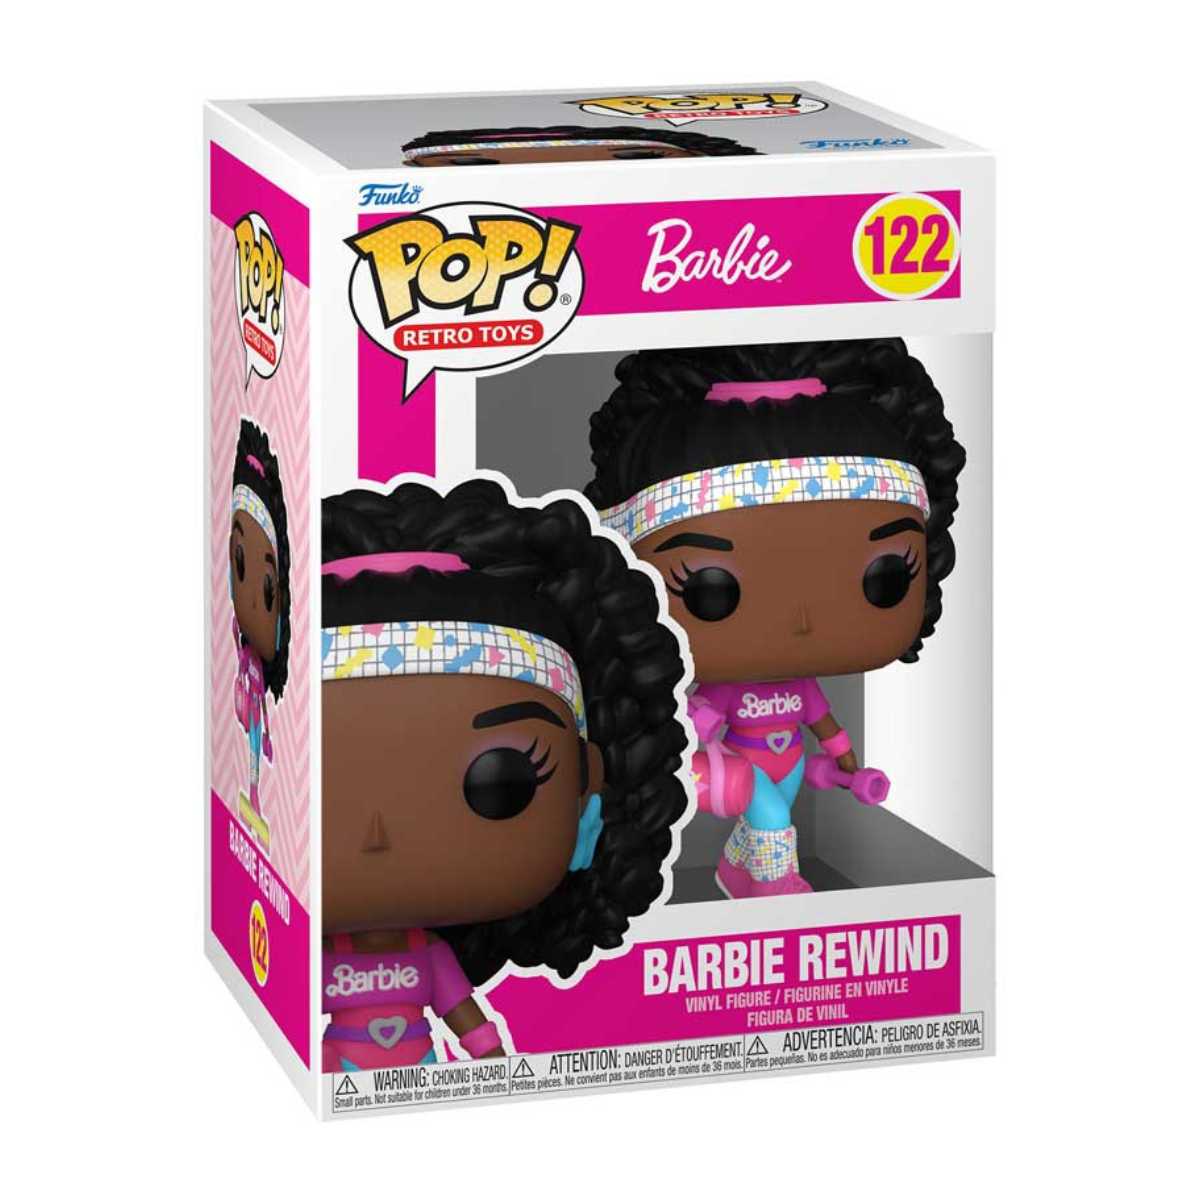 Barbie Rewind Funko Pop! Vinyl Figure #122 - Simon's Collectibles